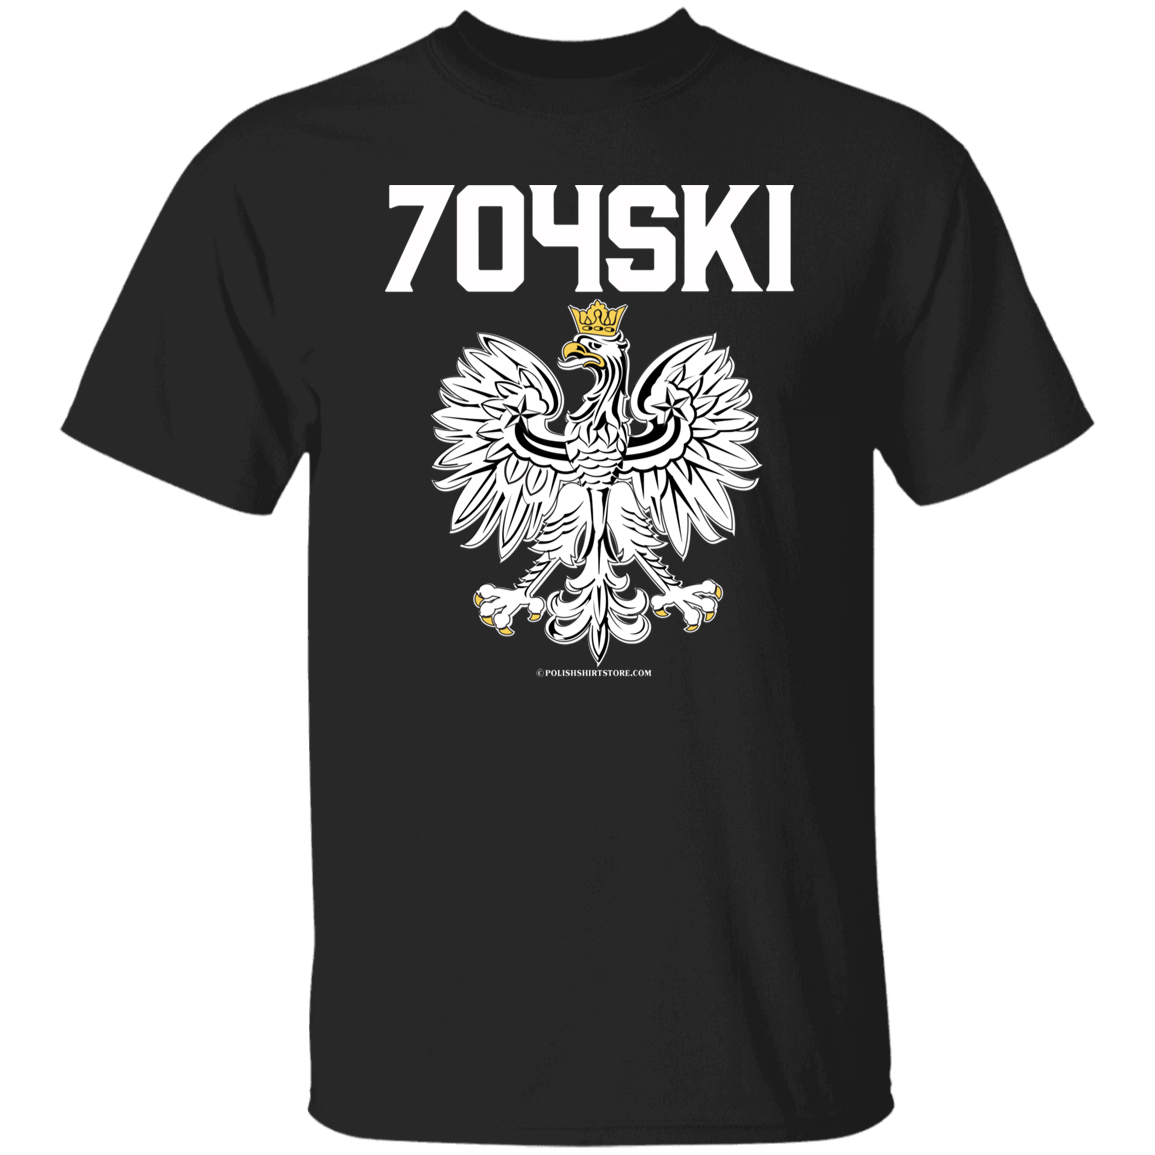 704SKI Apparel CustomCat G500 5.3 oz. T-Shirt Black S